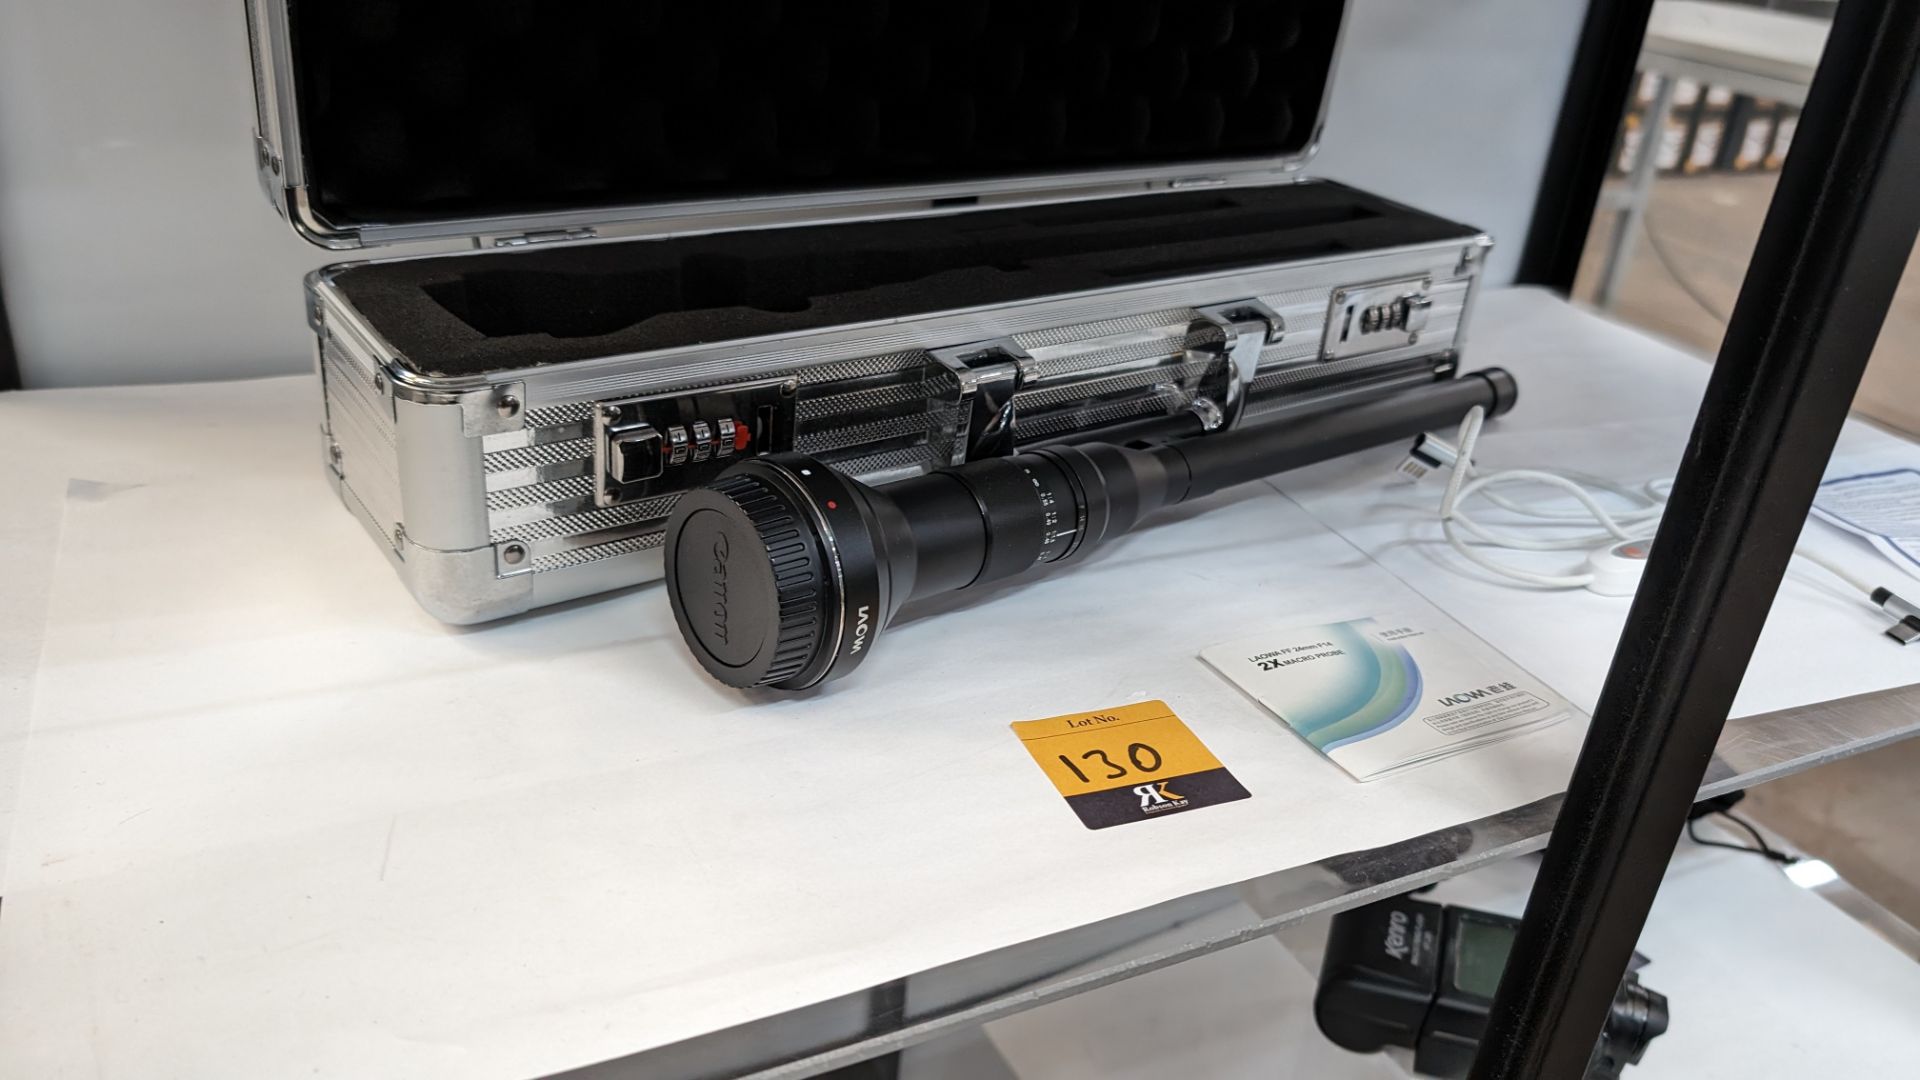 Venus Optics Laowa 2 x macro probe FF 24mm F14, including hard case & cable, incorporating push butt